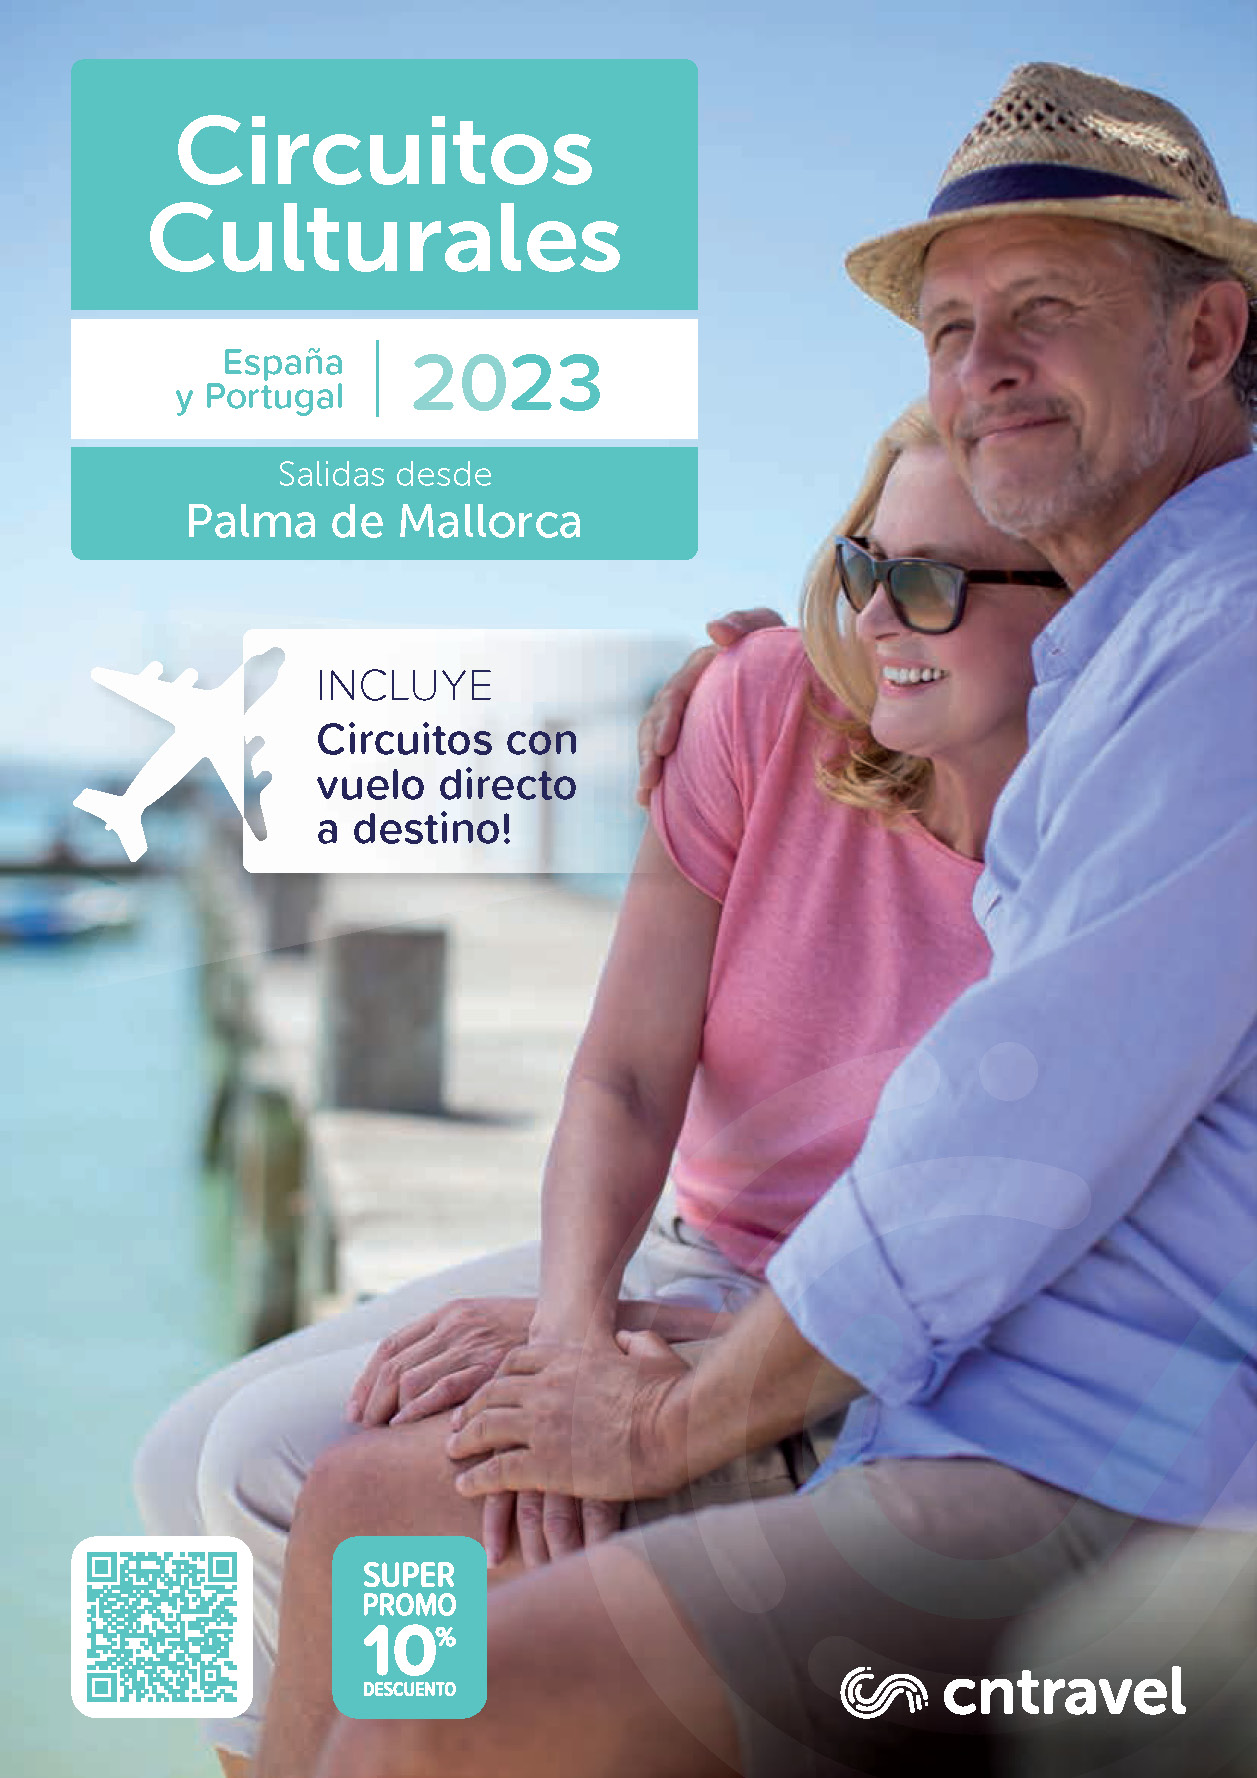 Catalogo CN Travel Circuitos Culturales 2023 Espana y Portugal salidas Palma de Mallorca